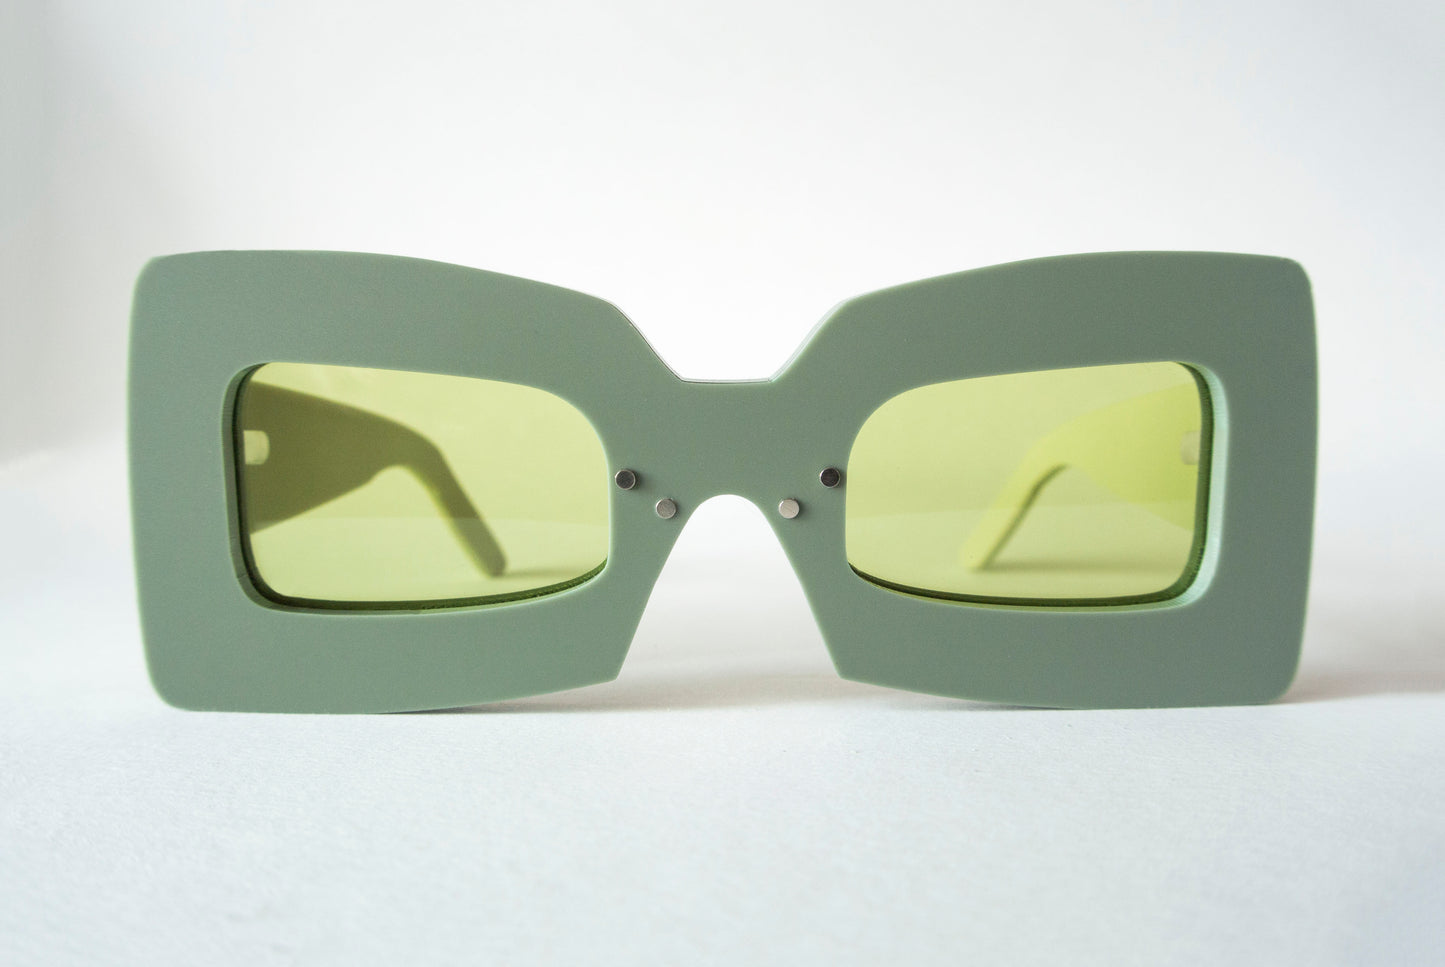 khaki color square shaped glasses with green lenses